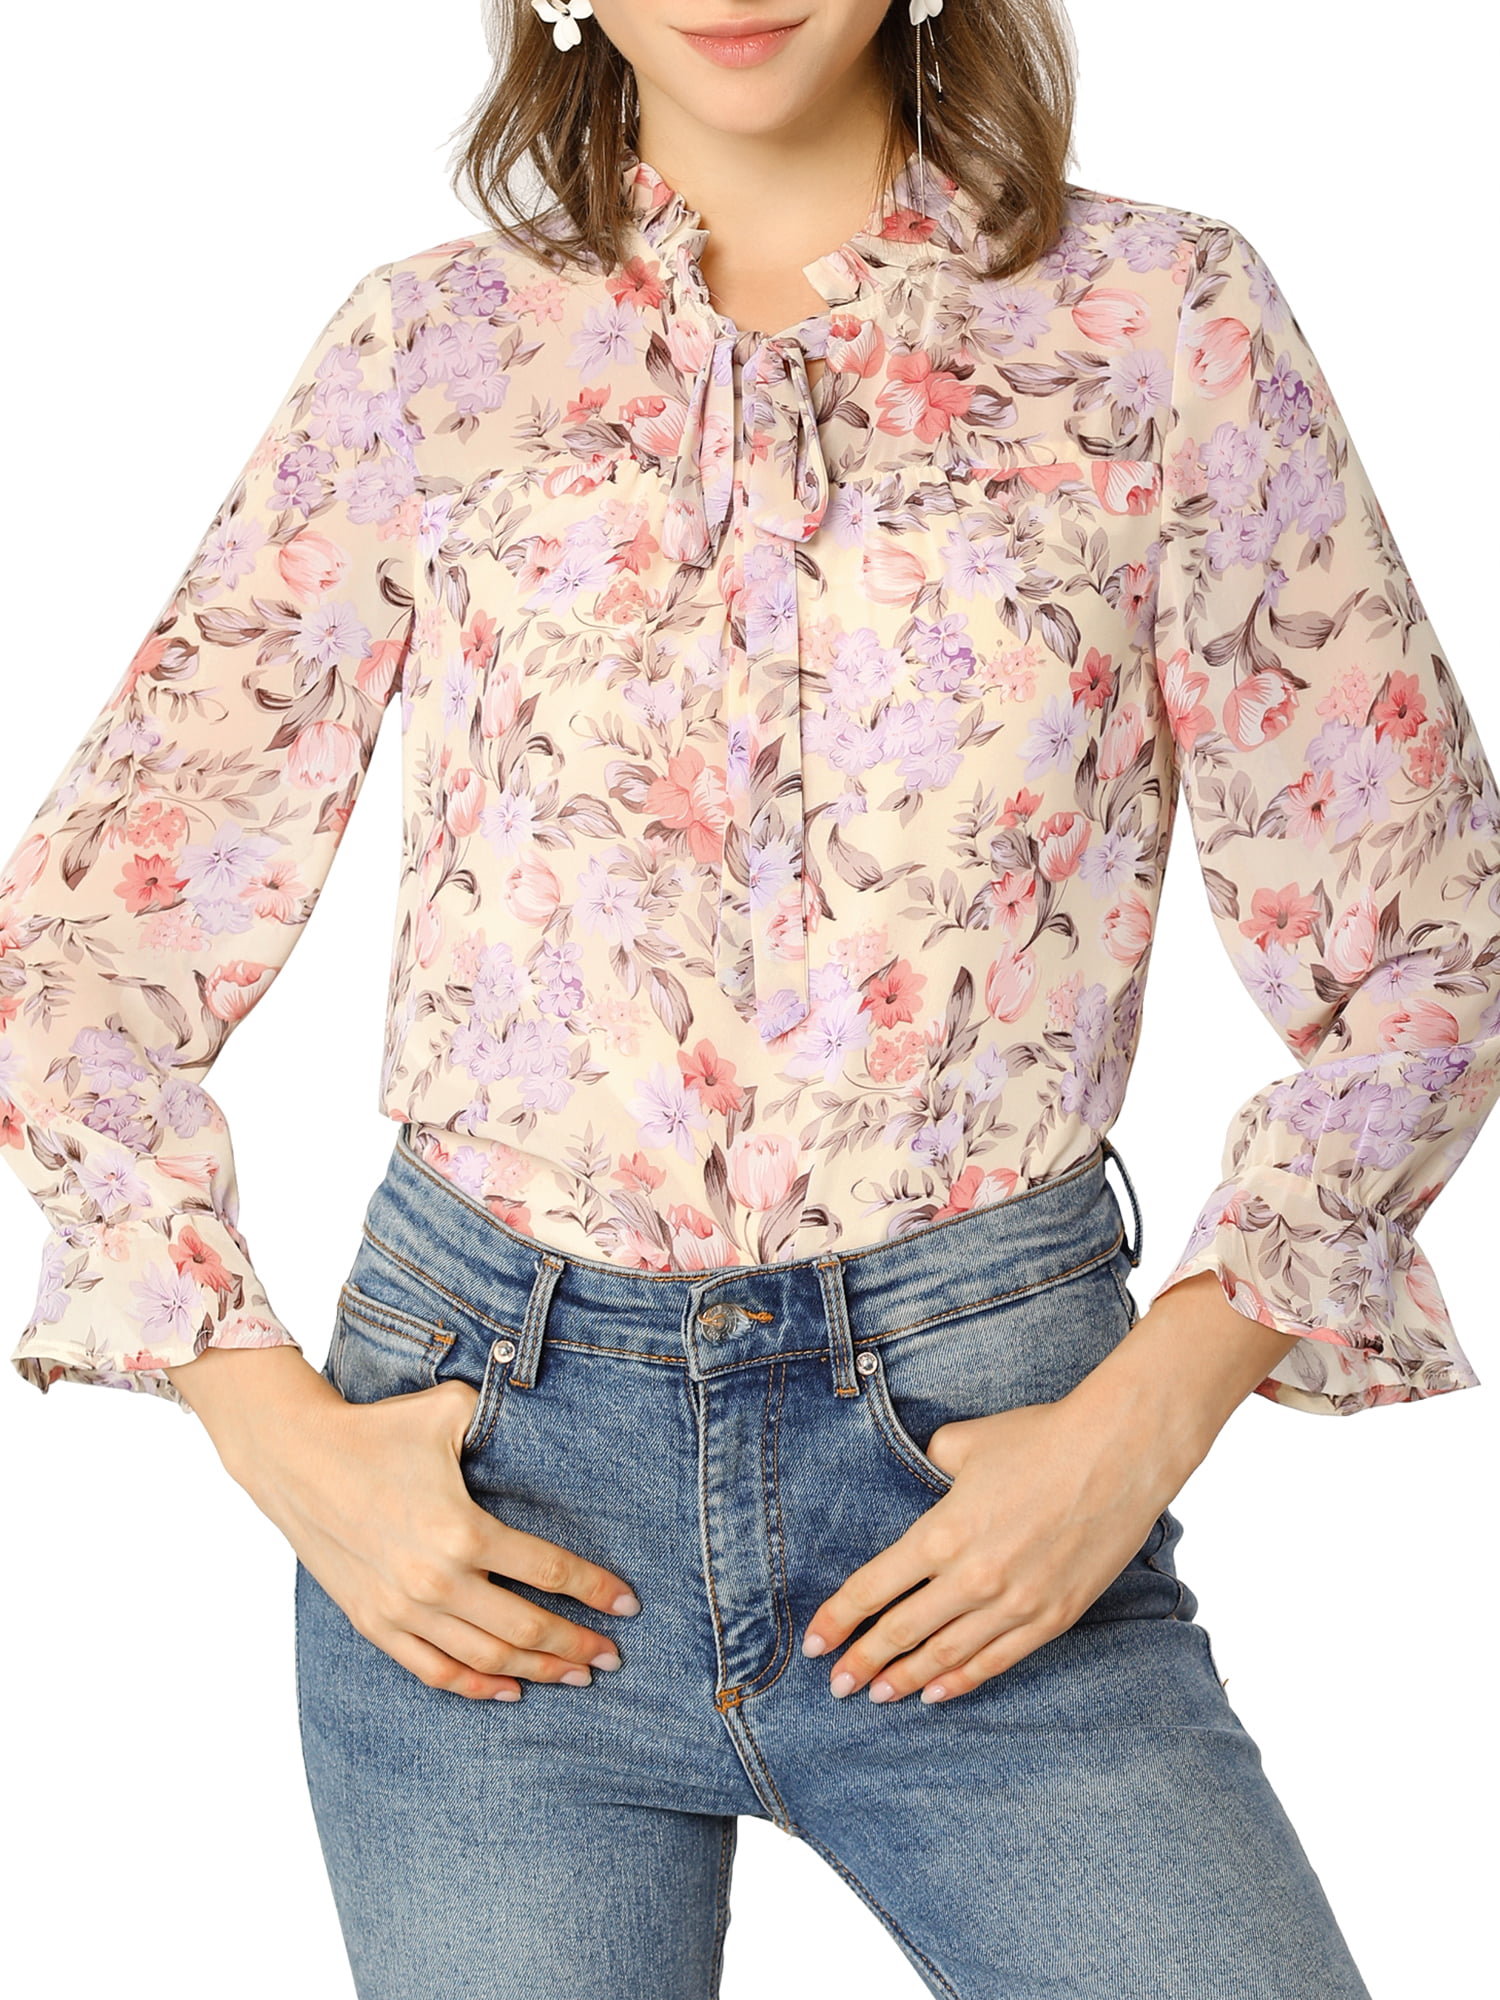 HERLIAN Ruffled Floral Collar Shirt